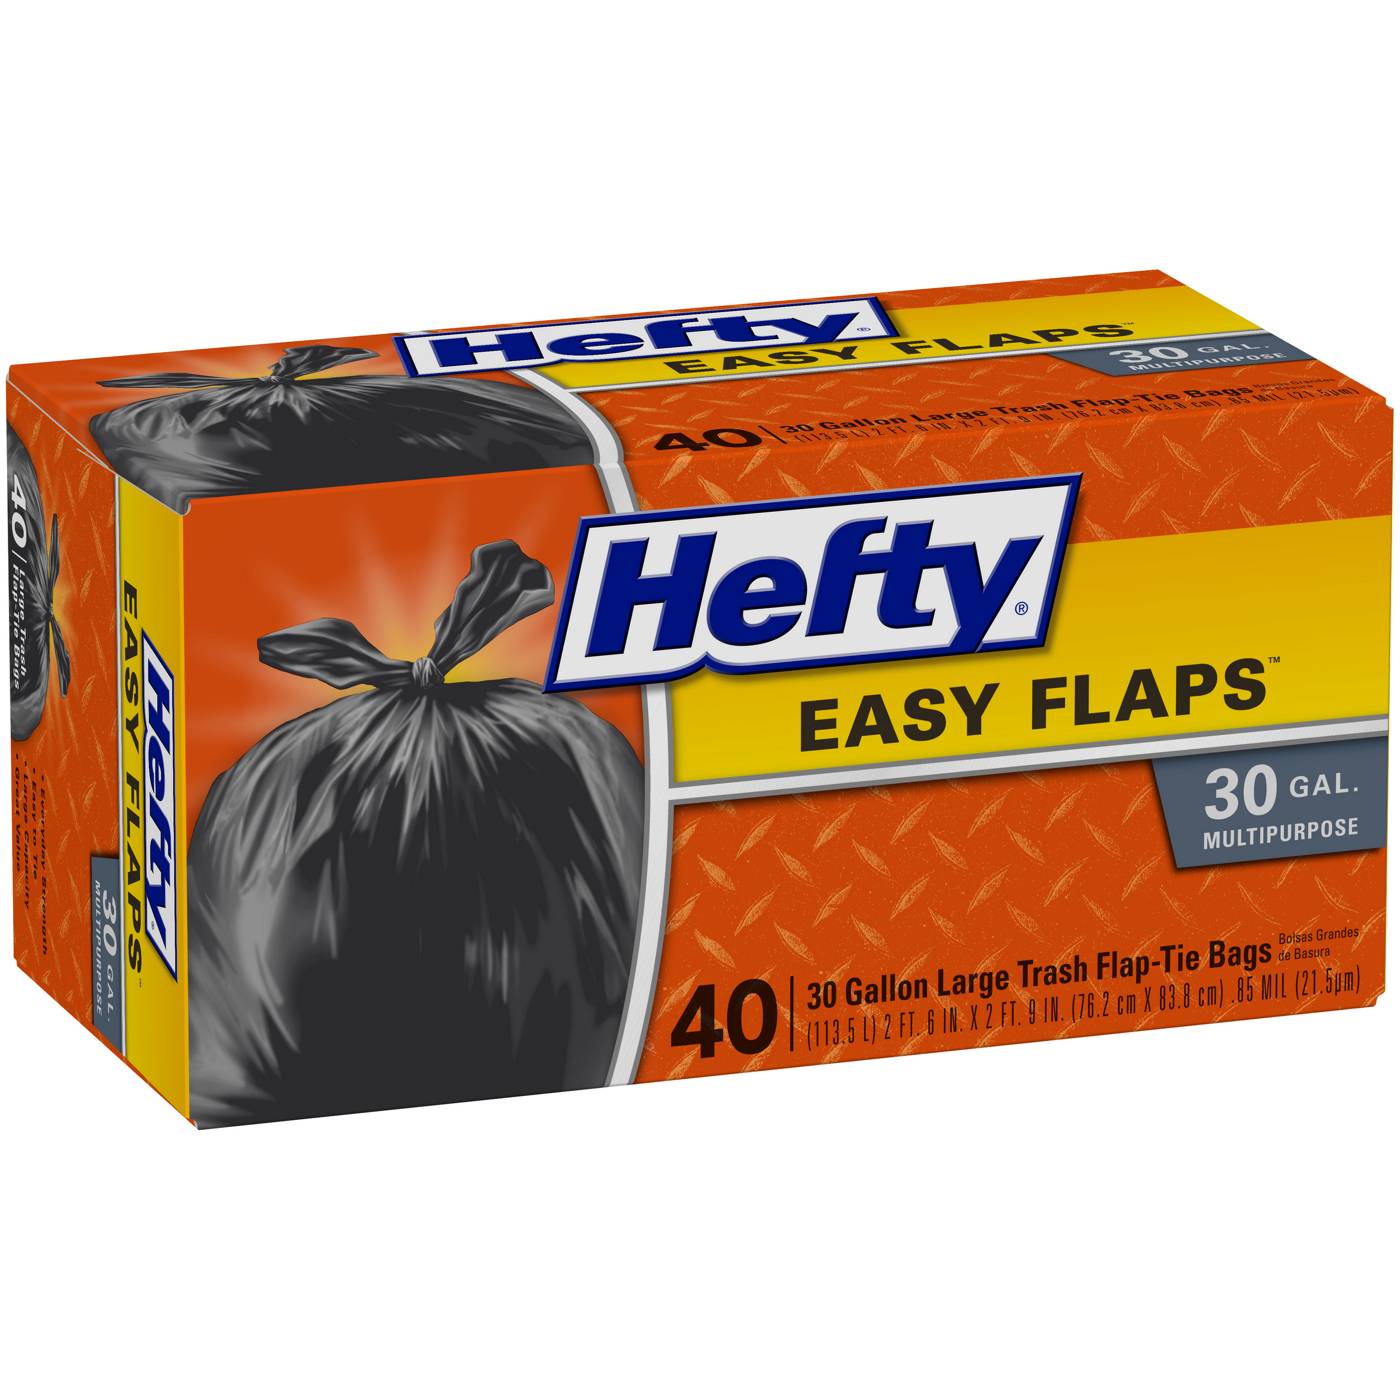 Hefty EasyFlaps Large 30 Gallon Trash Bags - Shop Trash Bags at H-E-B